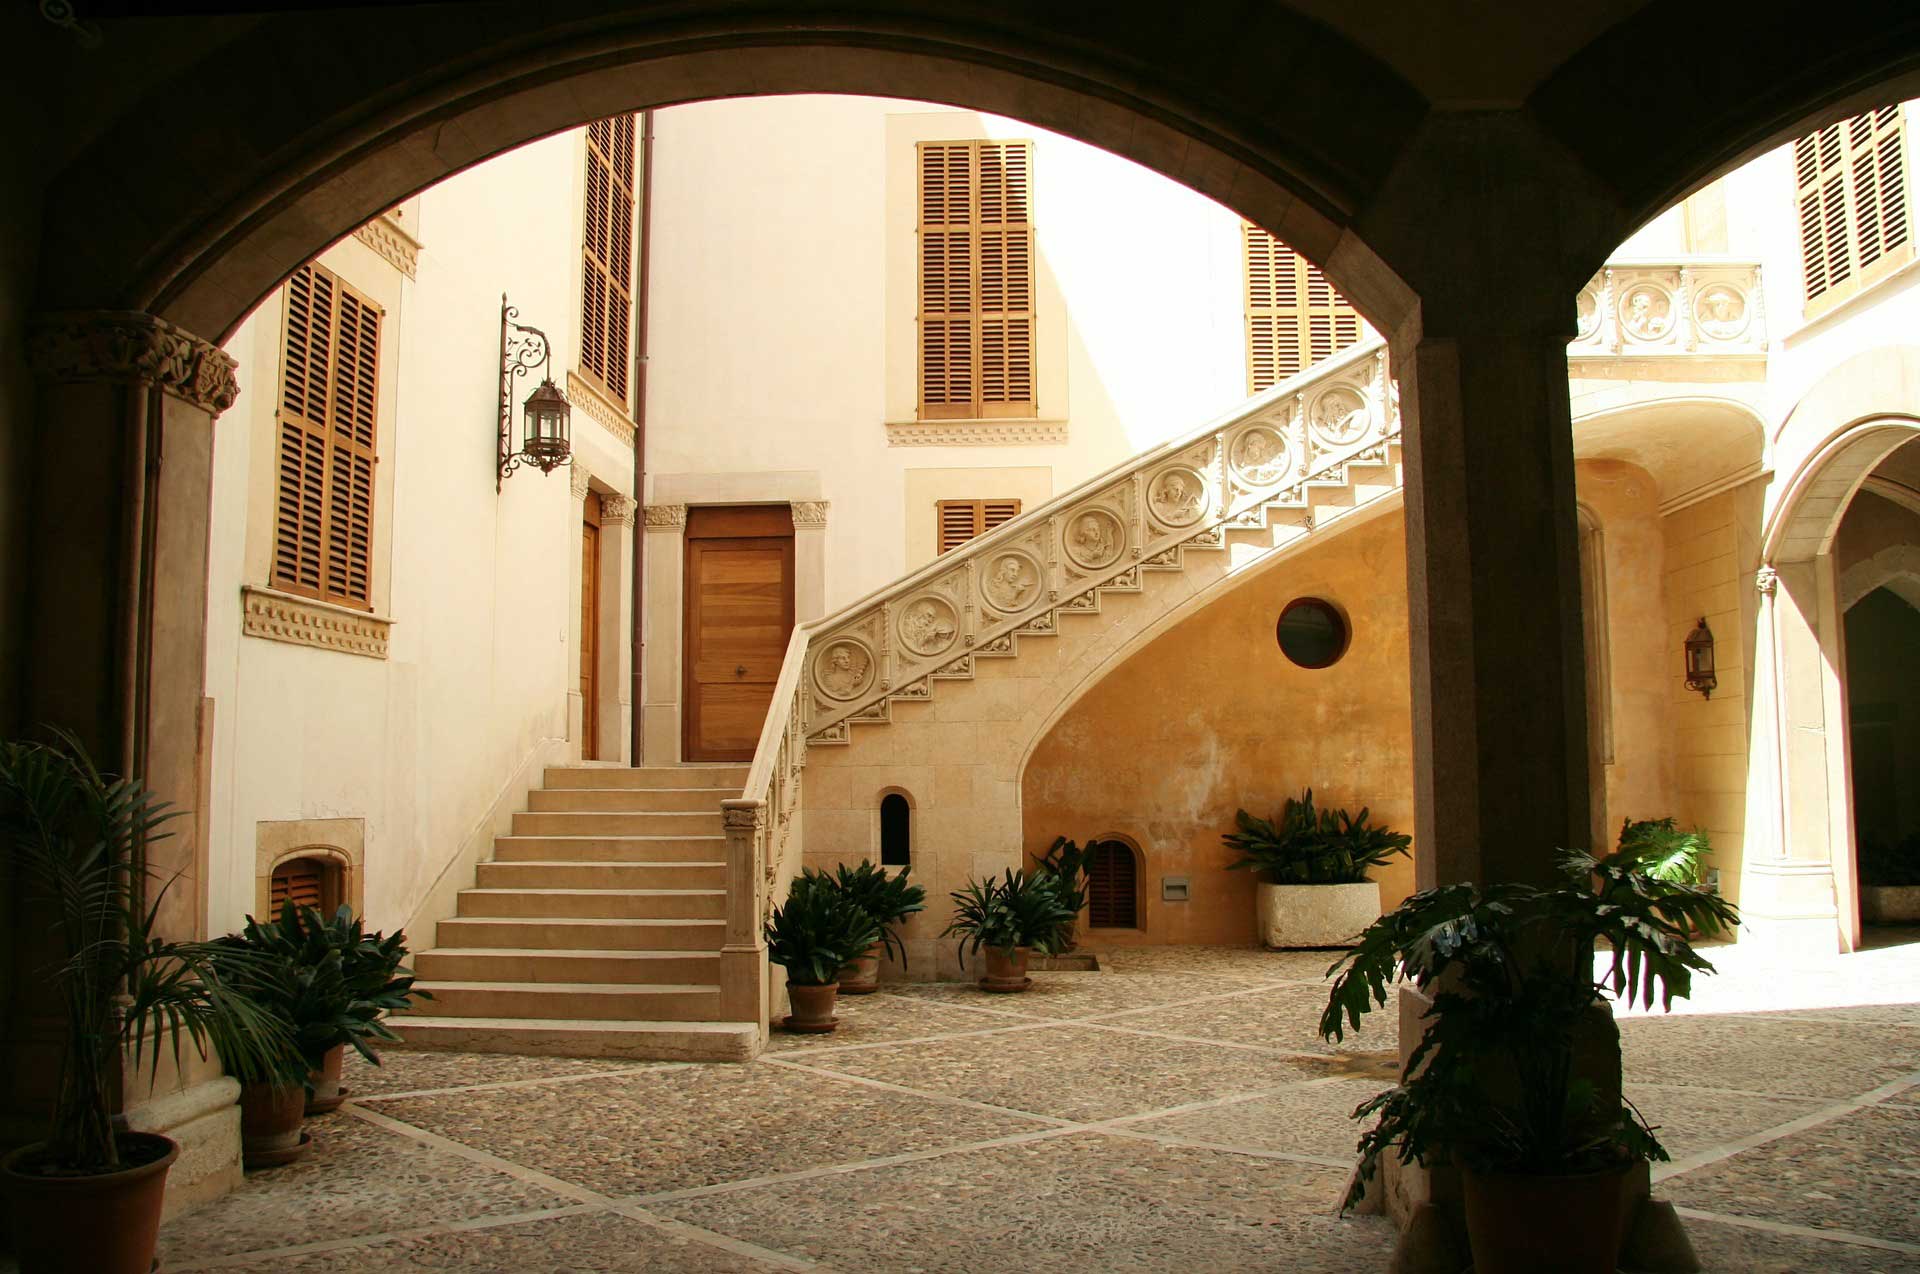 Spanish Courtyard - Lytchee